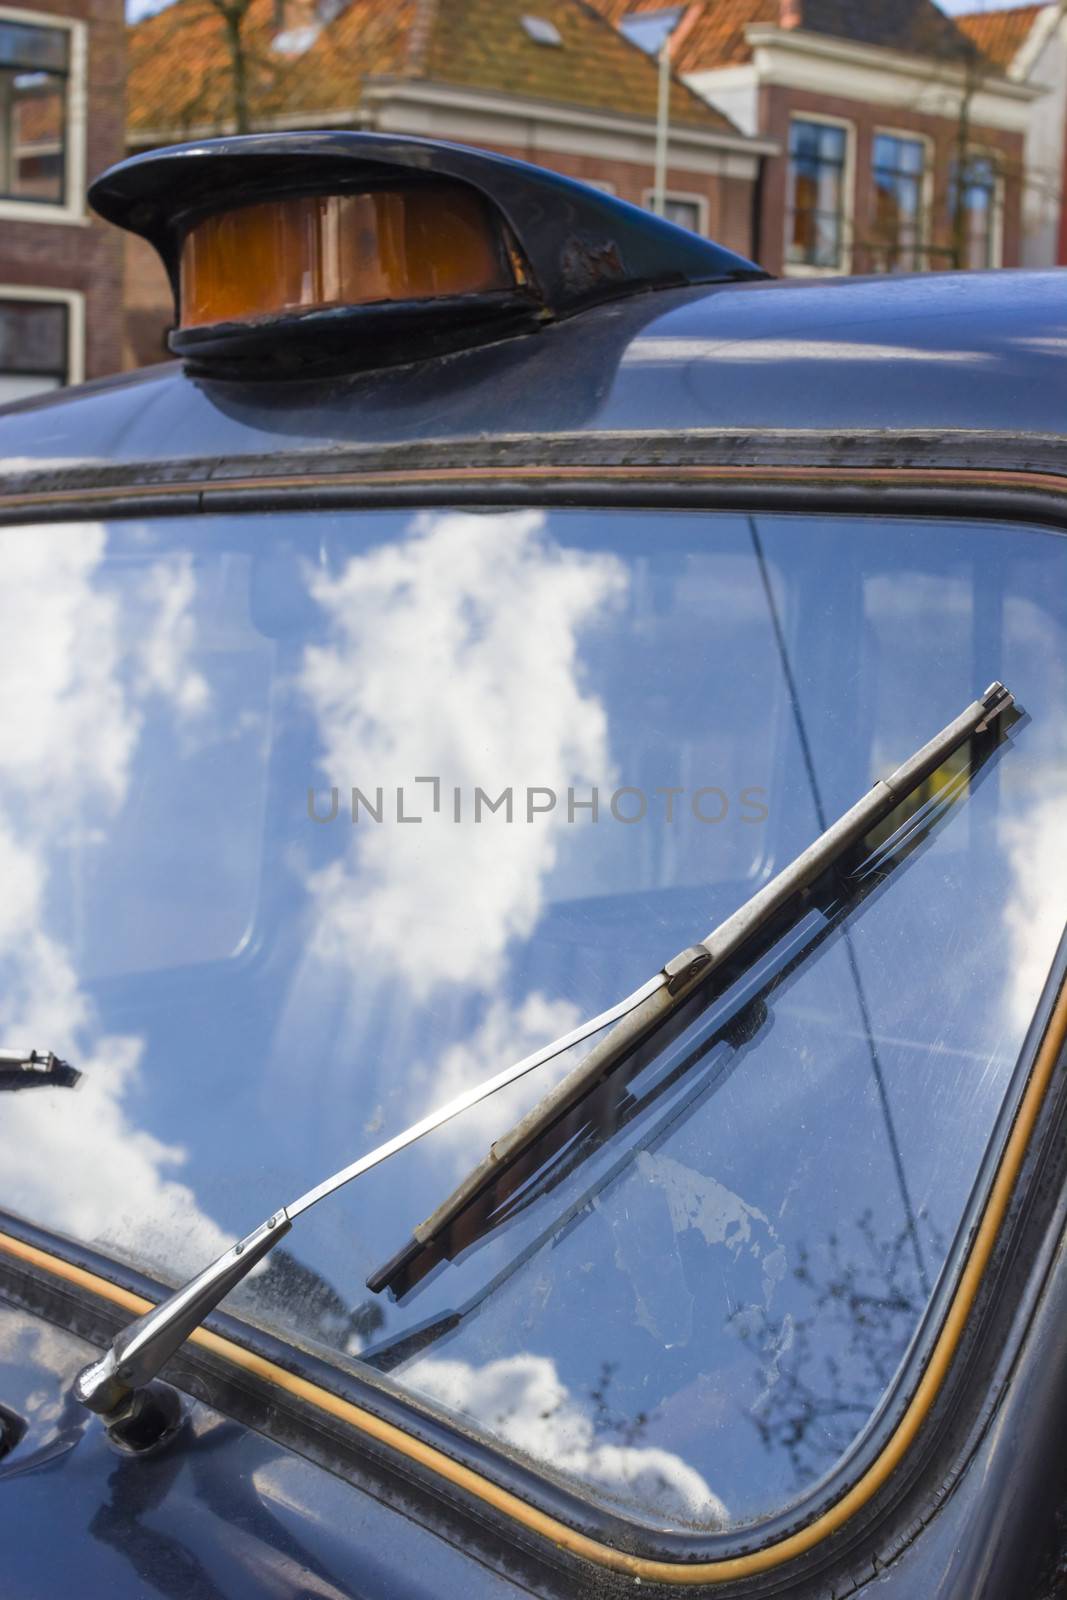 Vintage windshield wiper. Detail of windshield wiper on classic car.